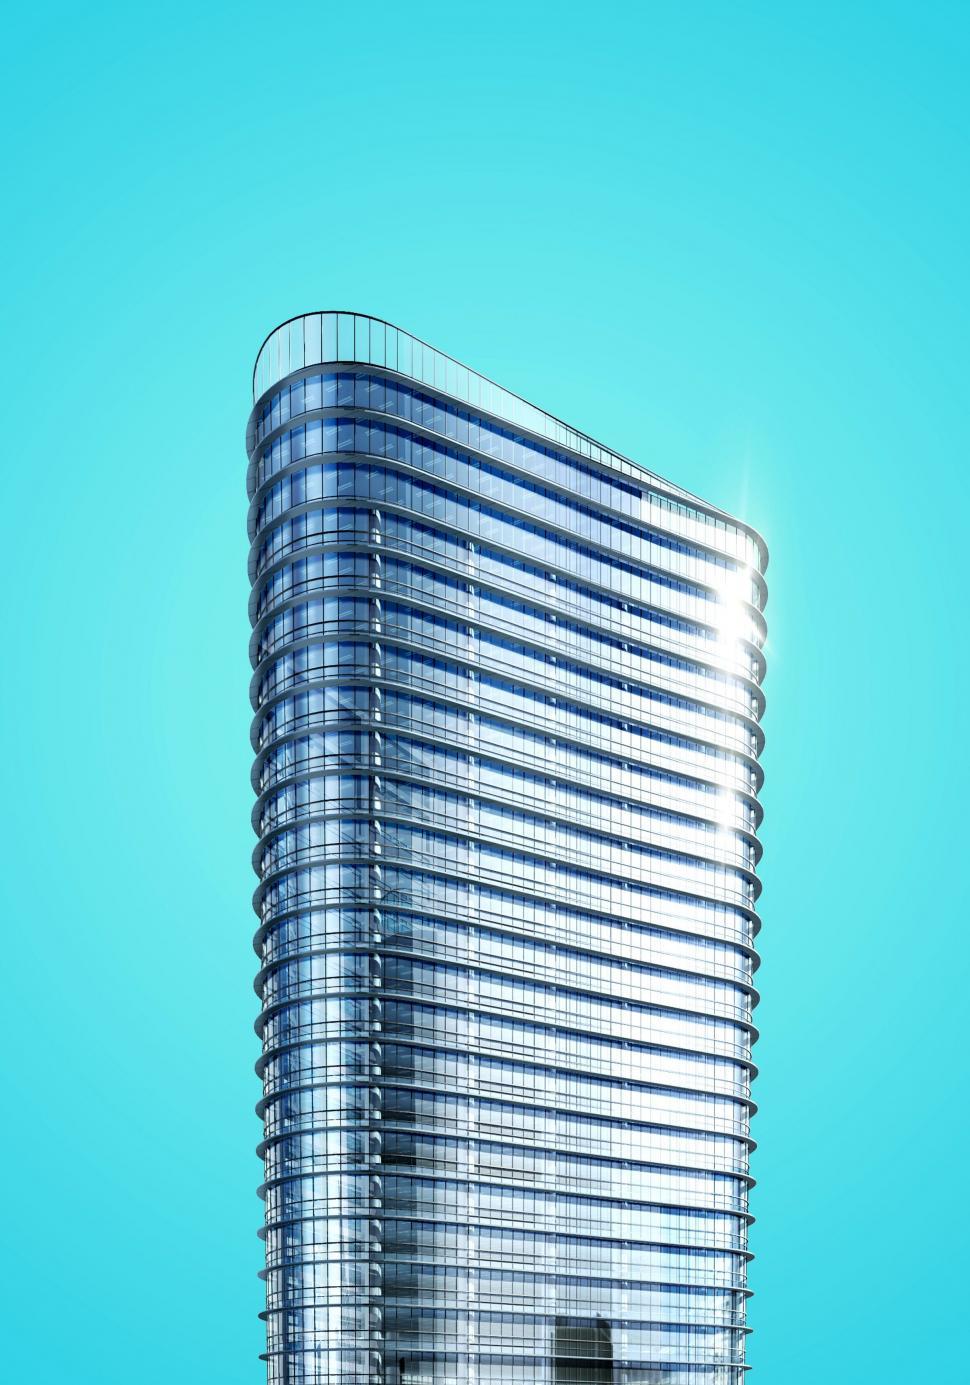 Free Image of The Towering Skyscraper in Urban Setting 